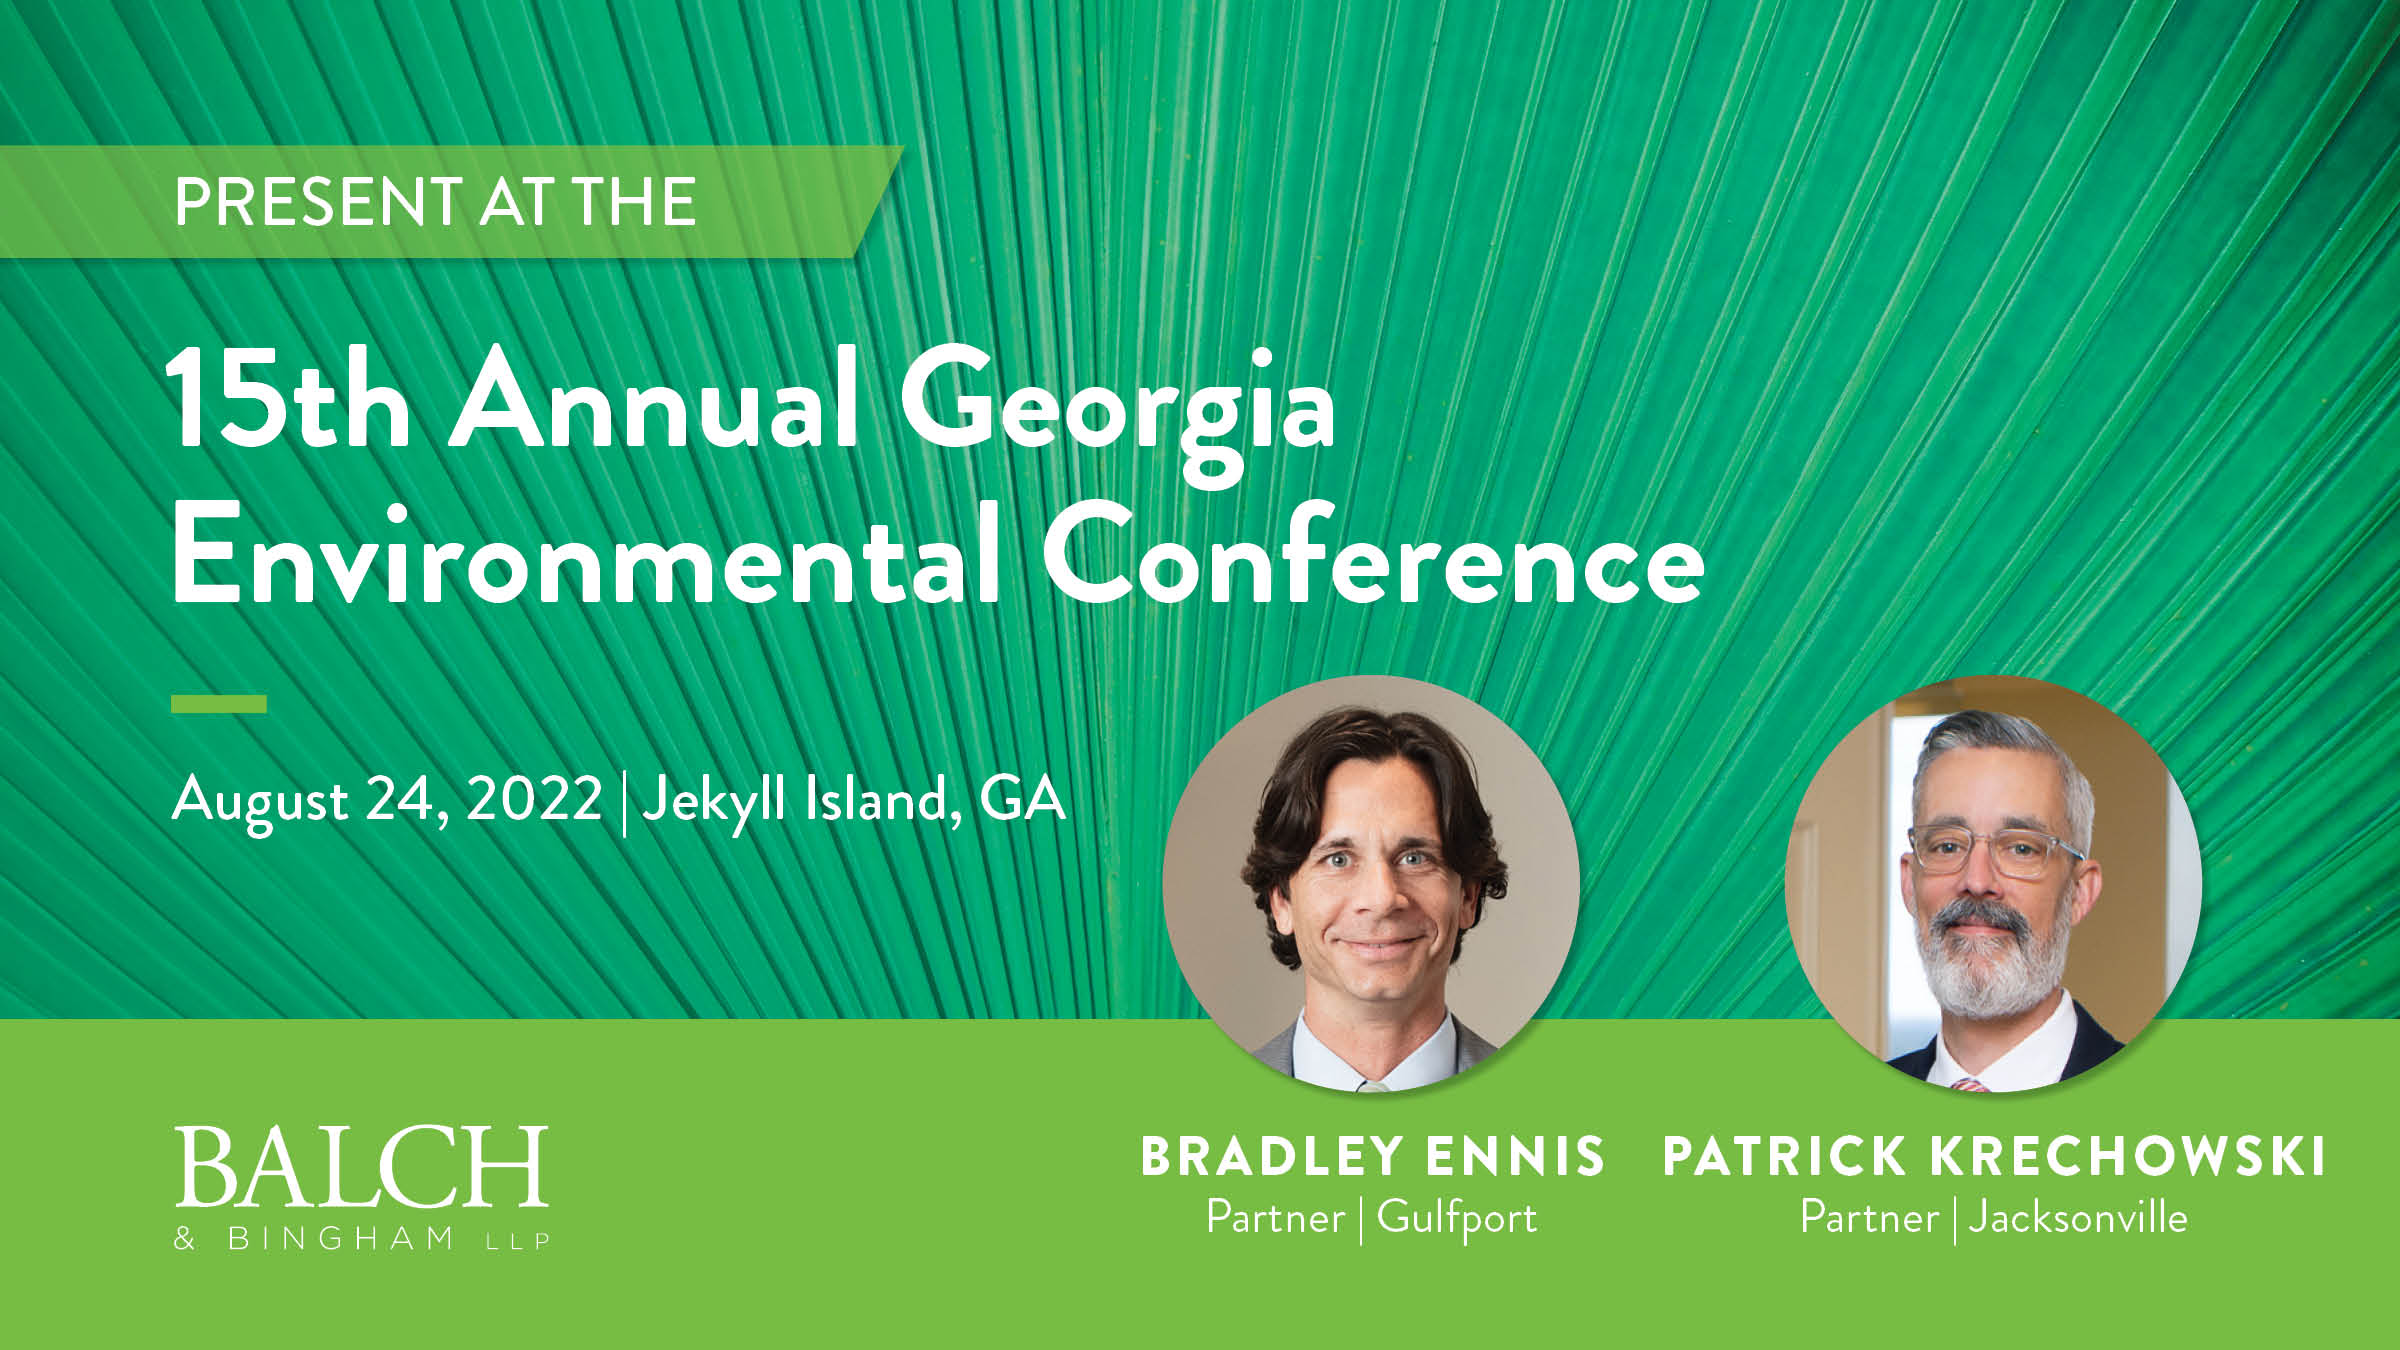 Patrick Krechowski & Bradley Ennis 15th Annual Environmental